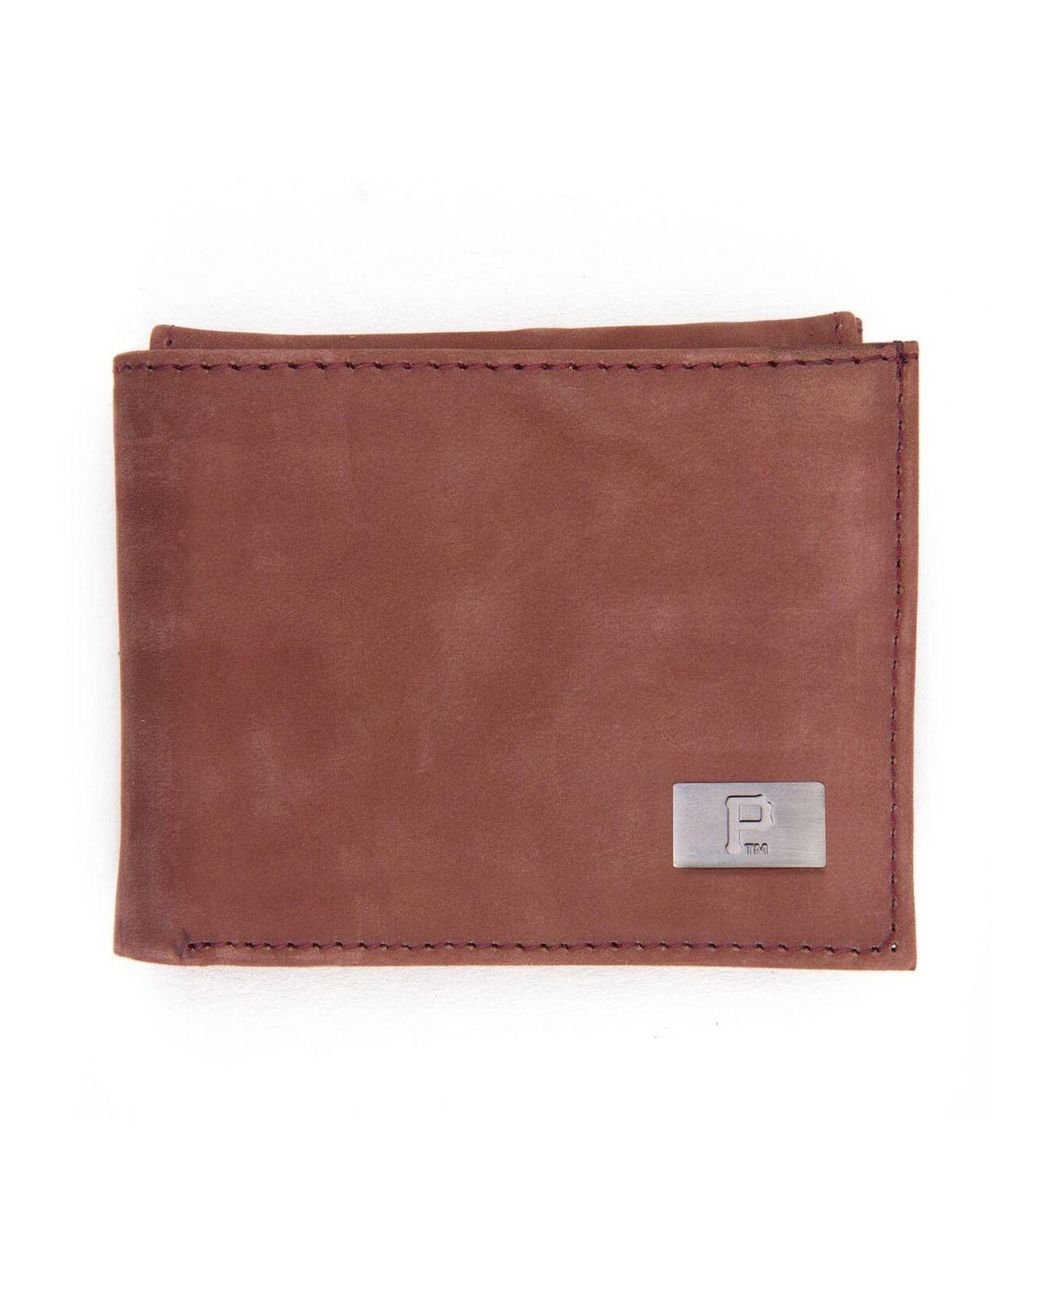 St. Louis Cardinals Front Pocket Leather Wallet